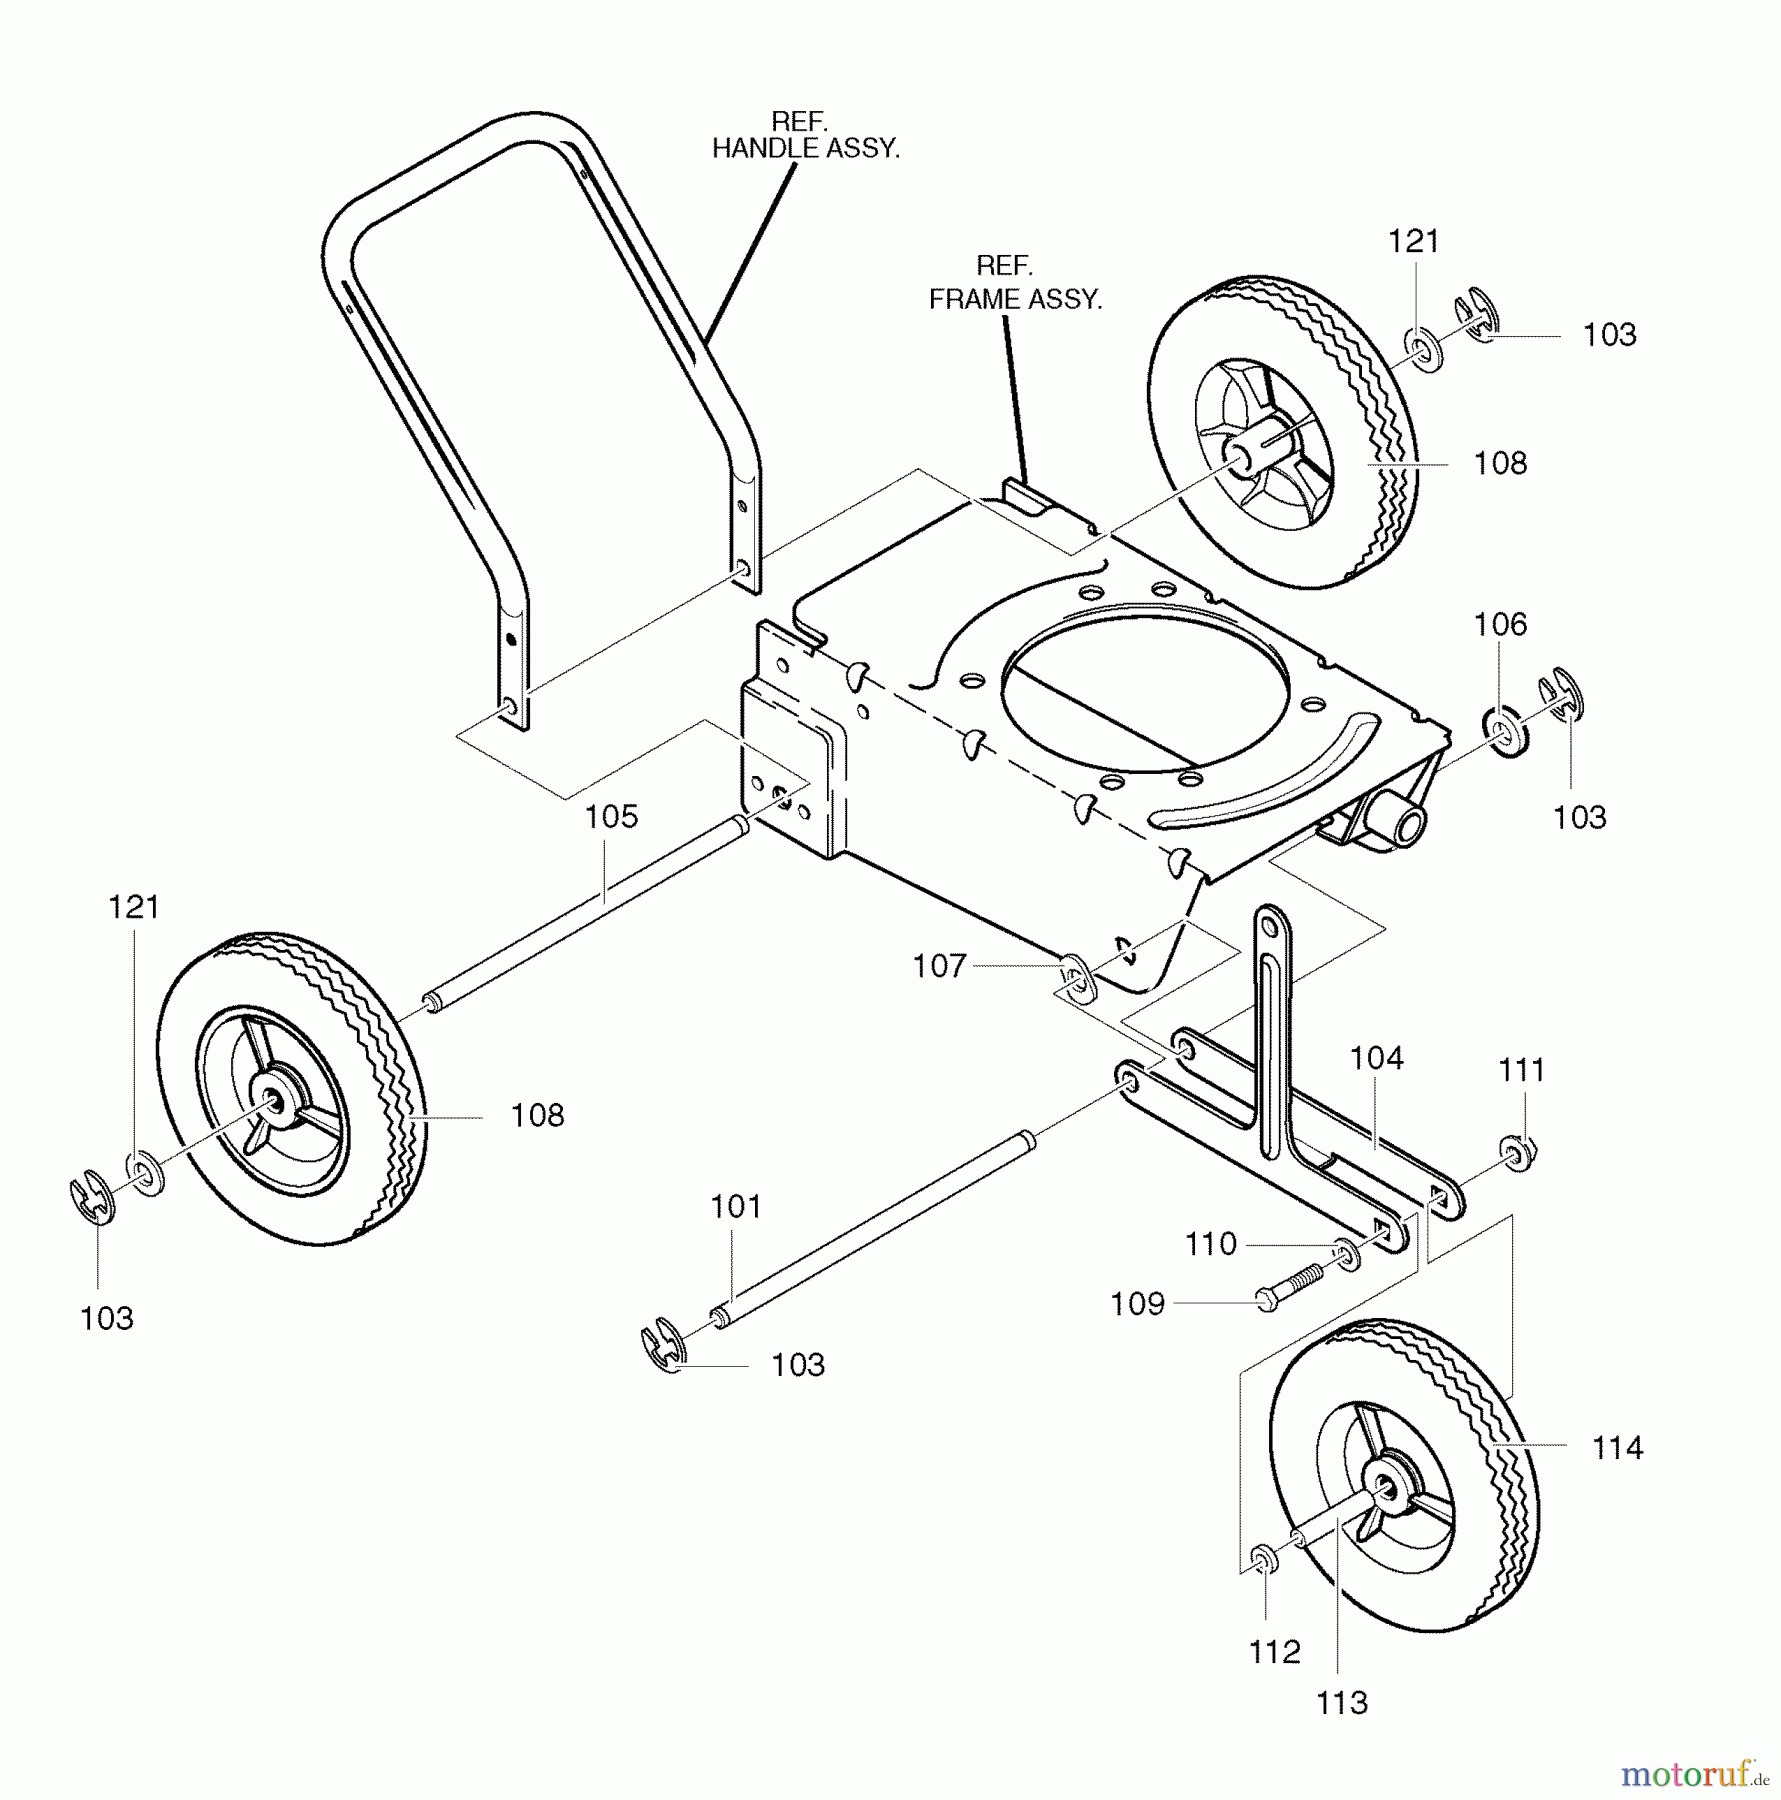  Murray Kantenschneider 536.772330 (77233000NA) - Craftsman Edger (2007) (Sears) Wheel Assembly